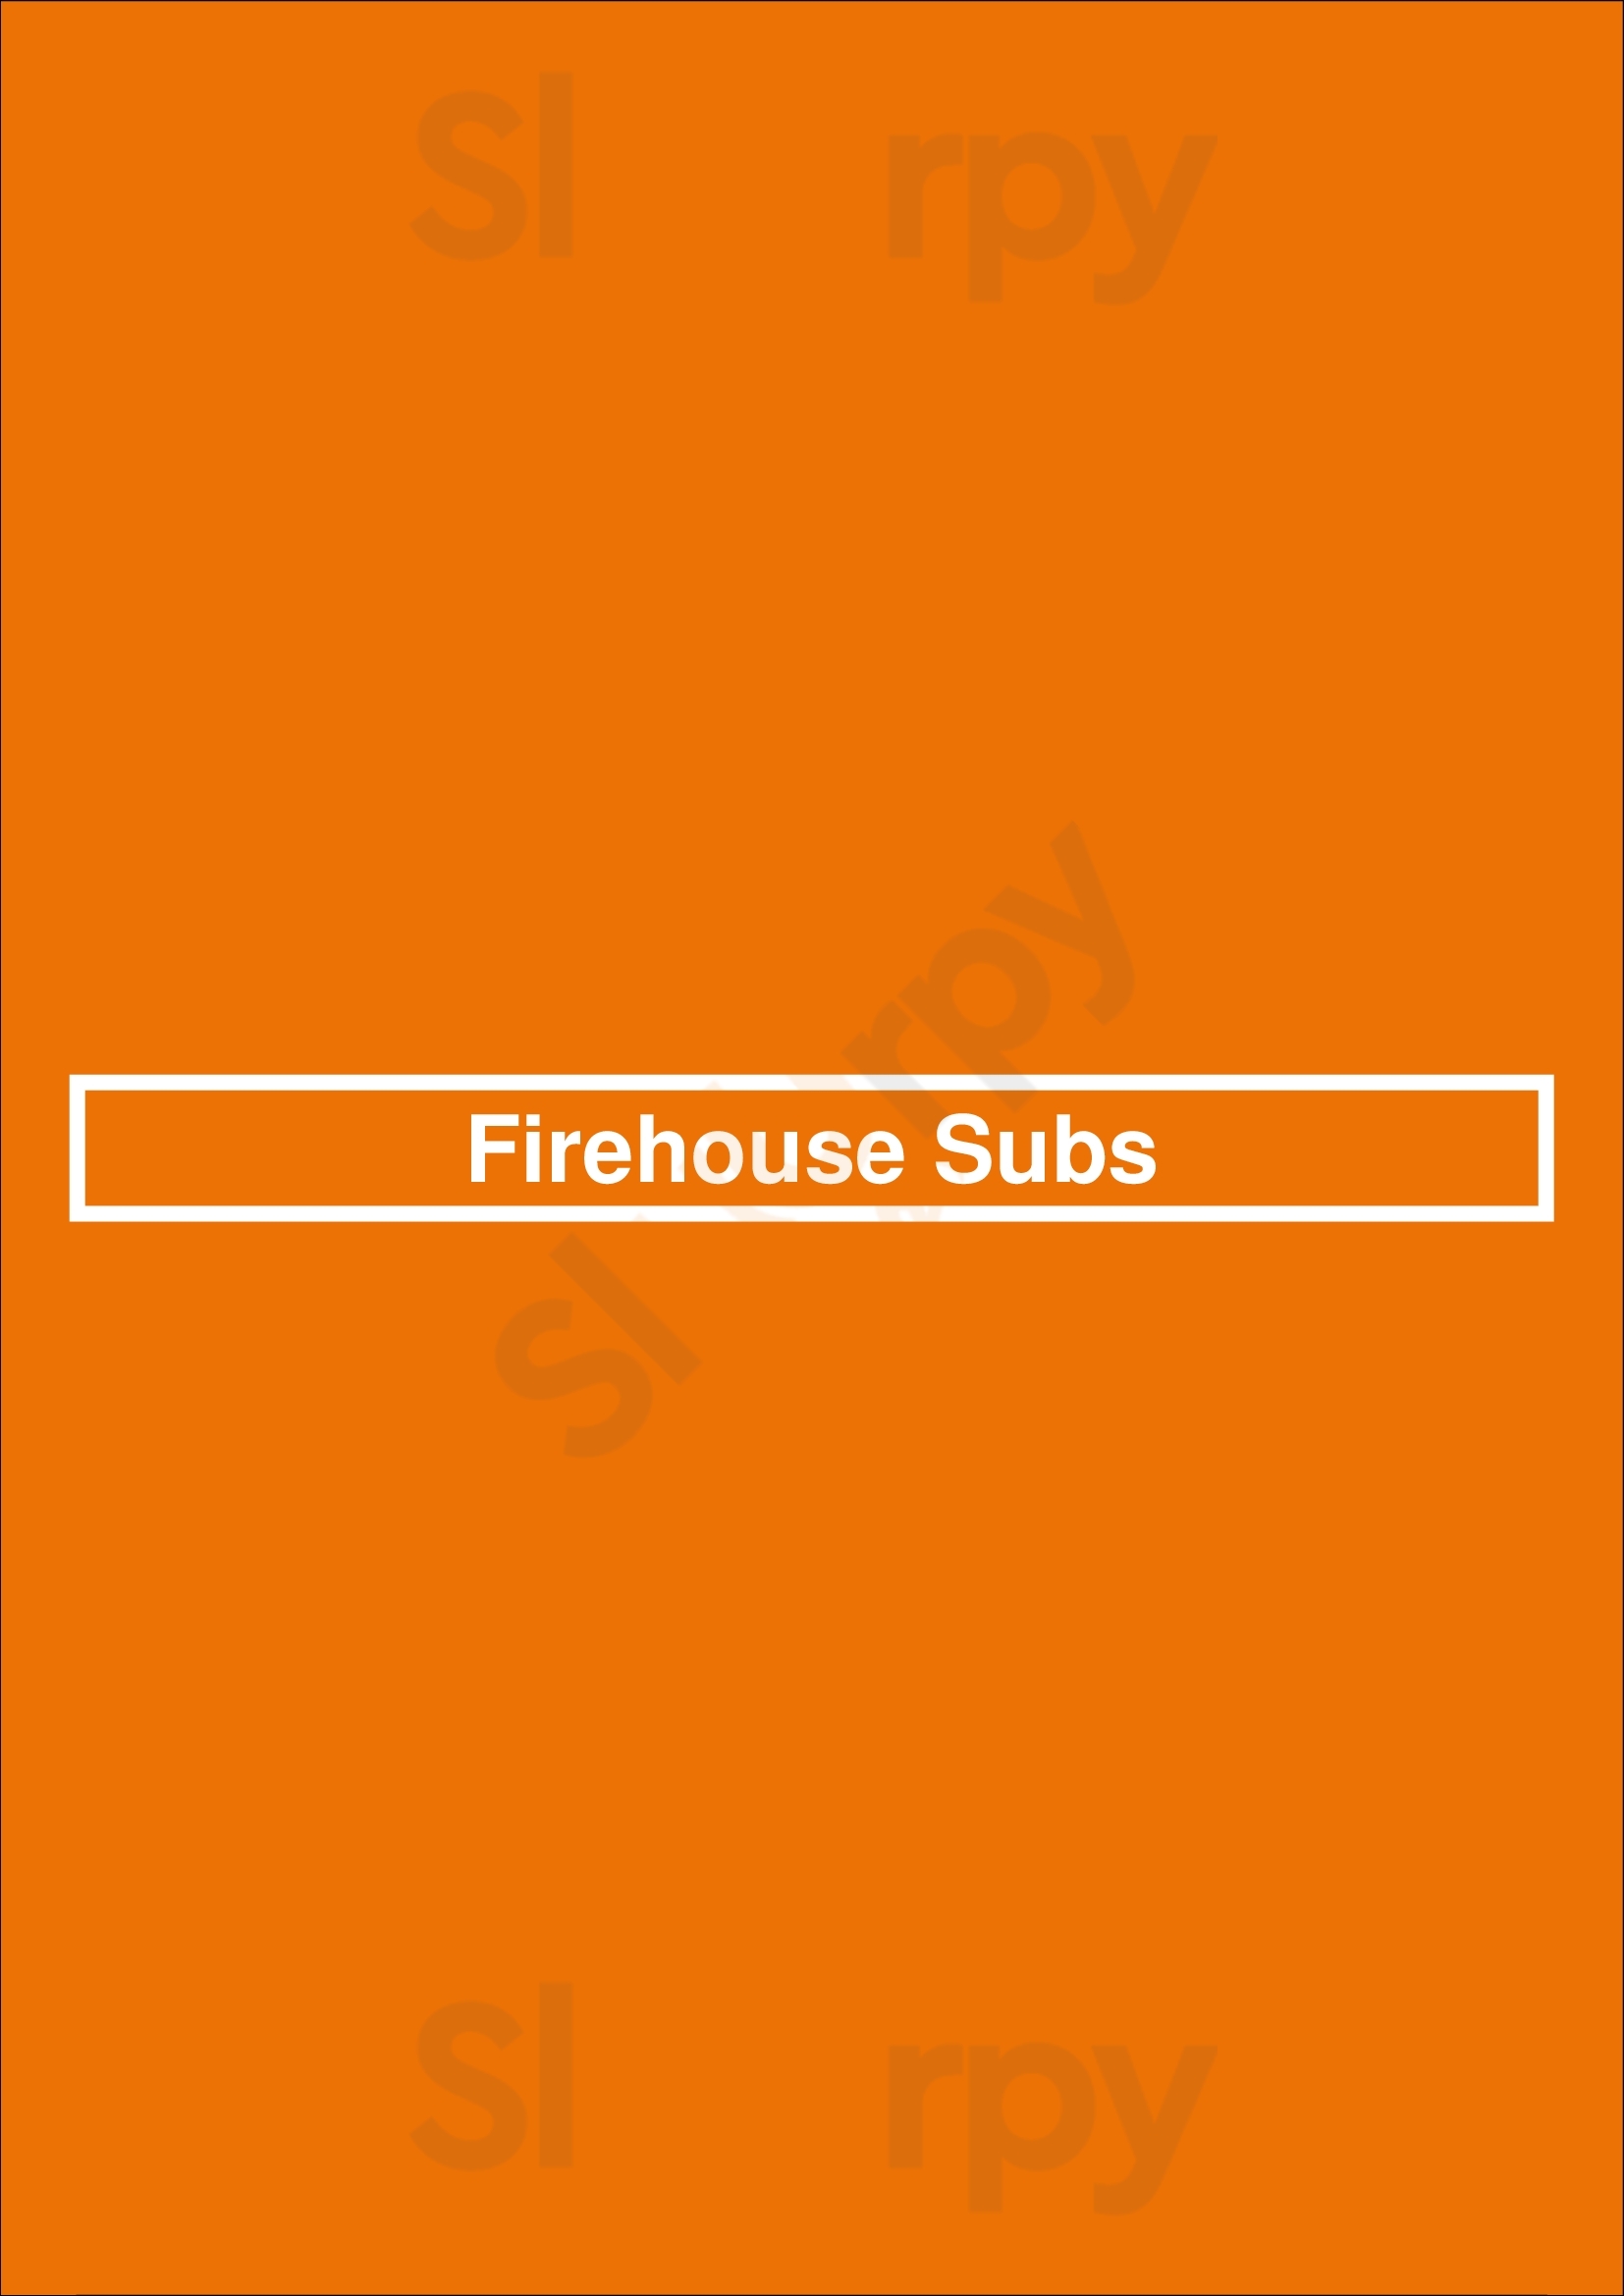 Firehouse Subs London Menu - 1